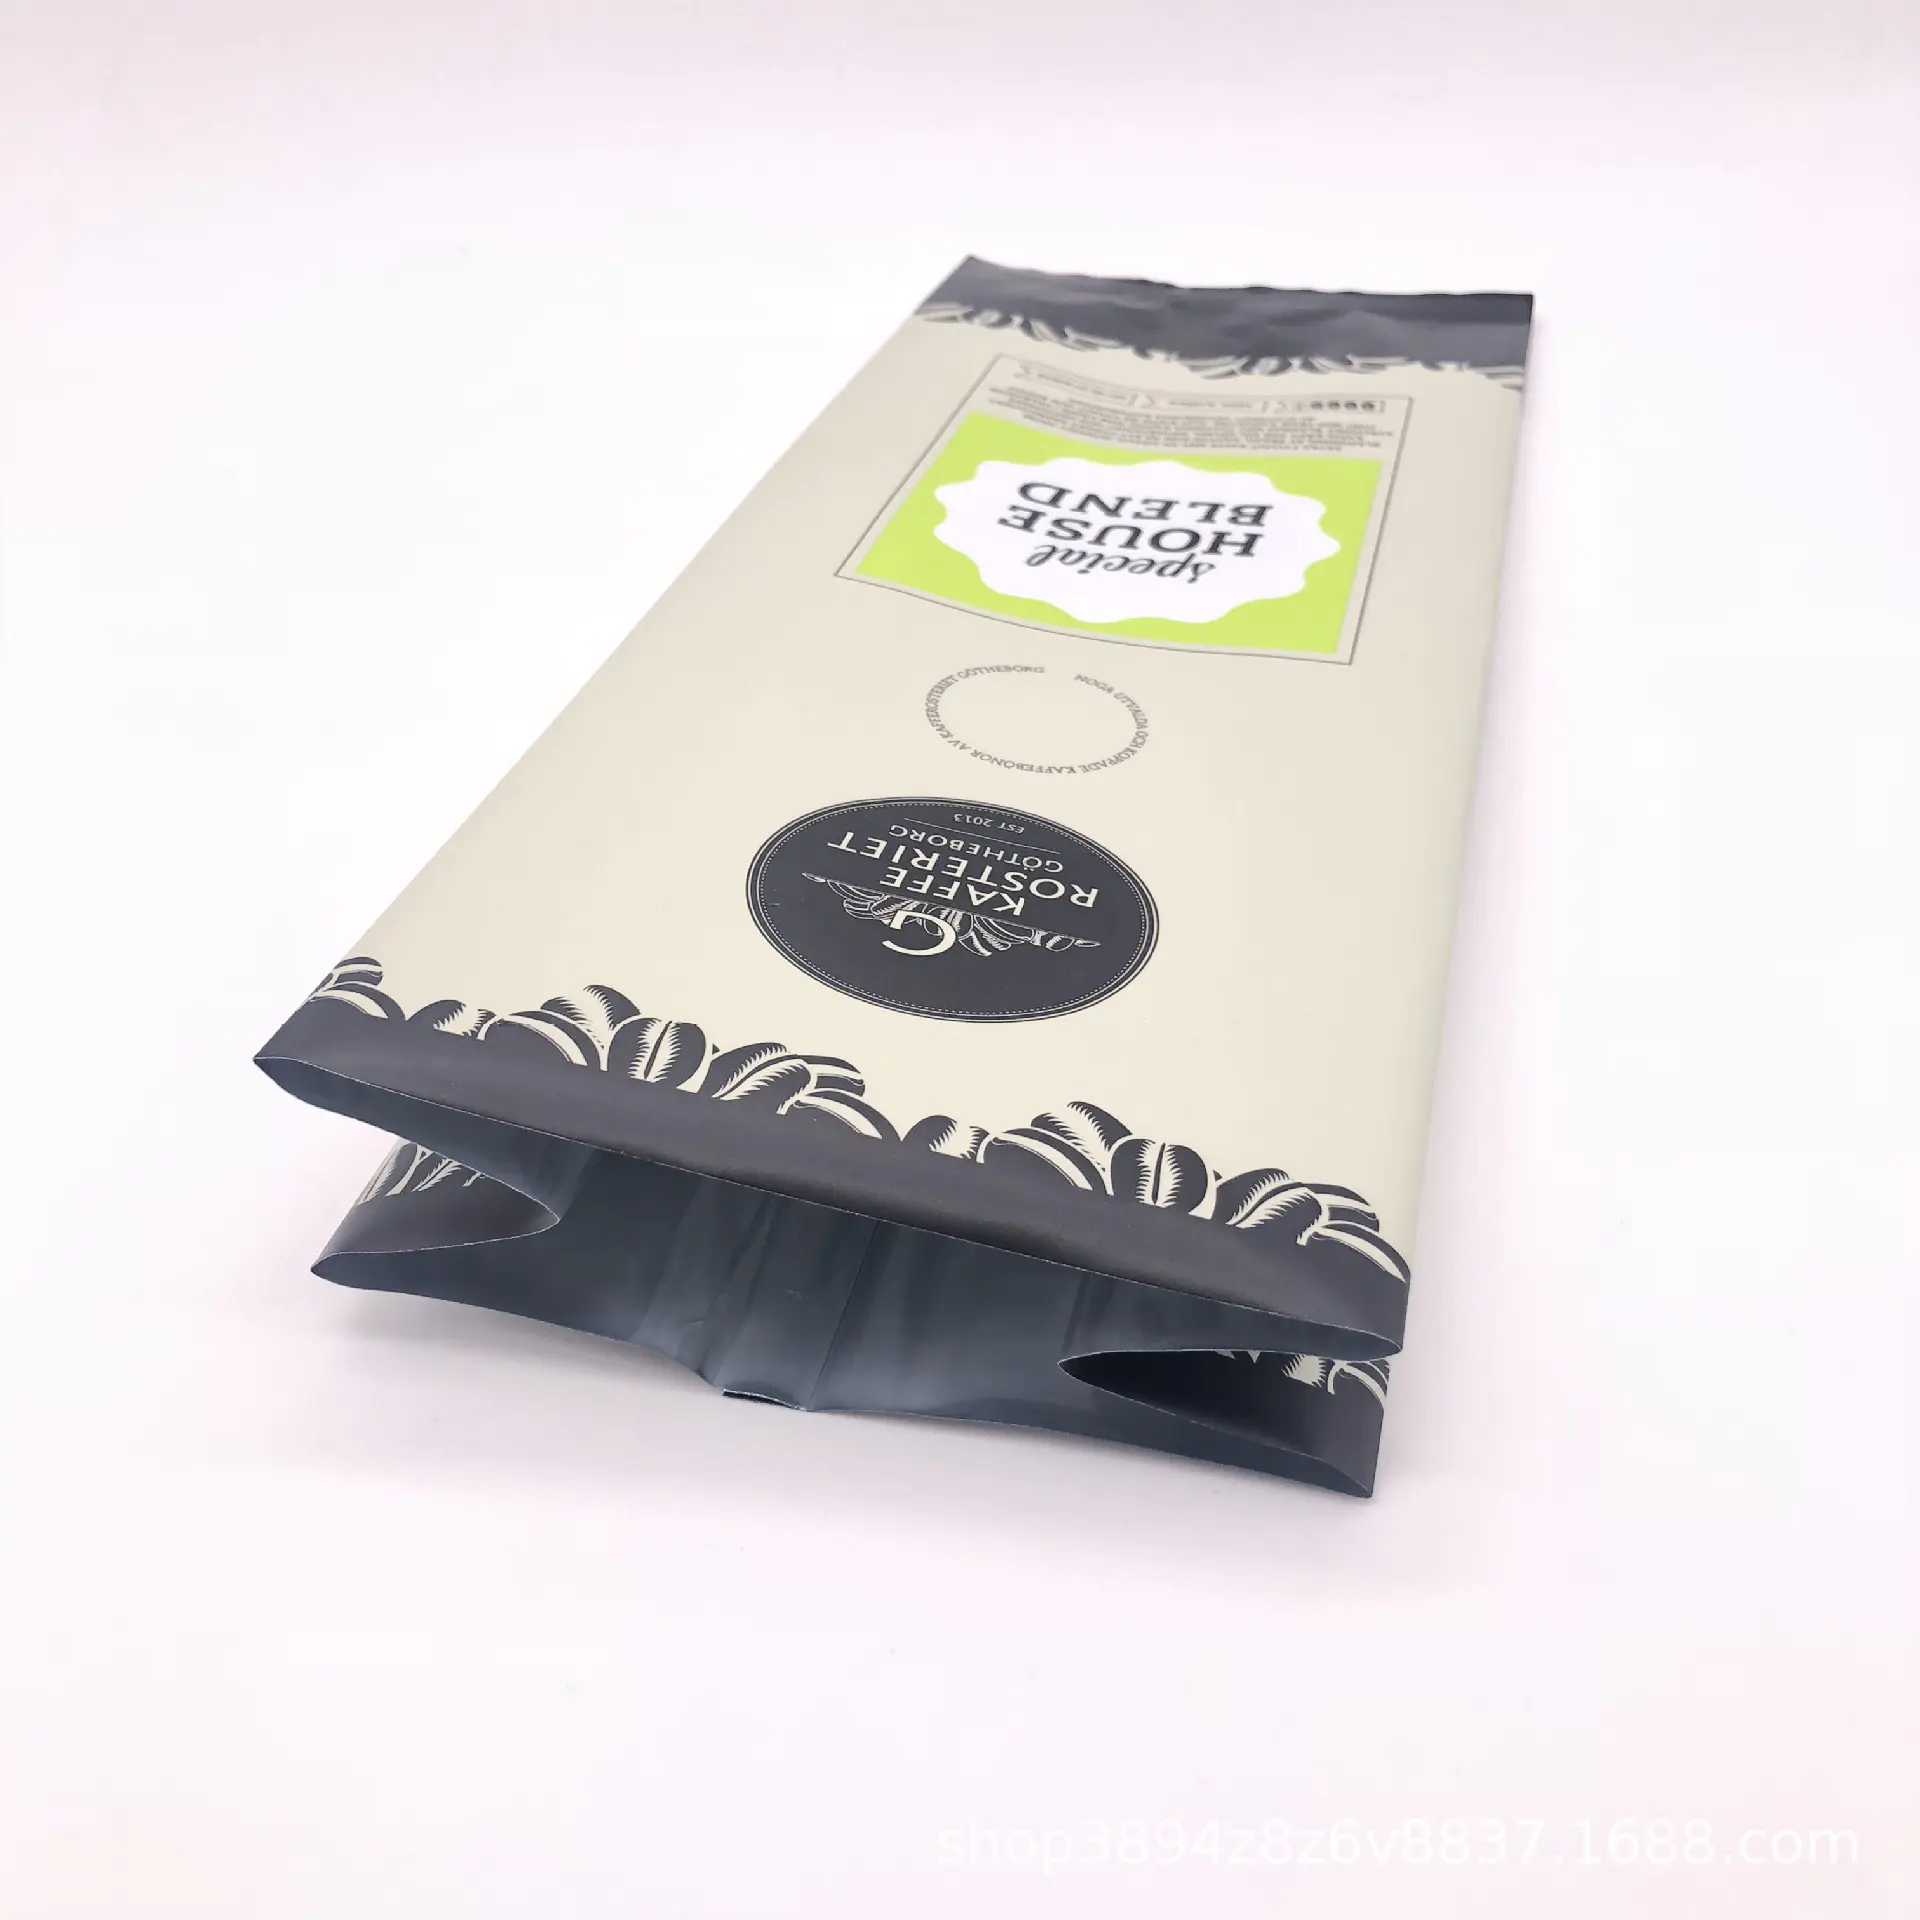 Custom resealable aluminium foil bag for coffee packaging